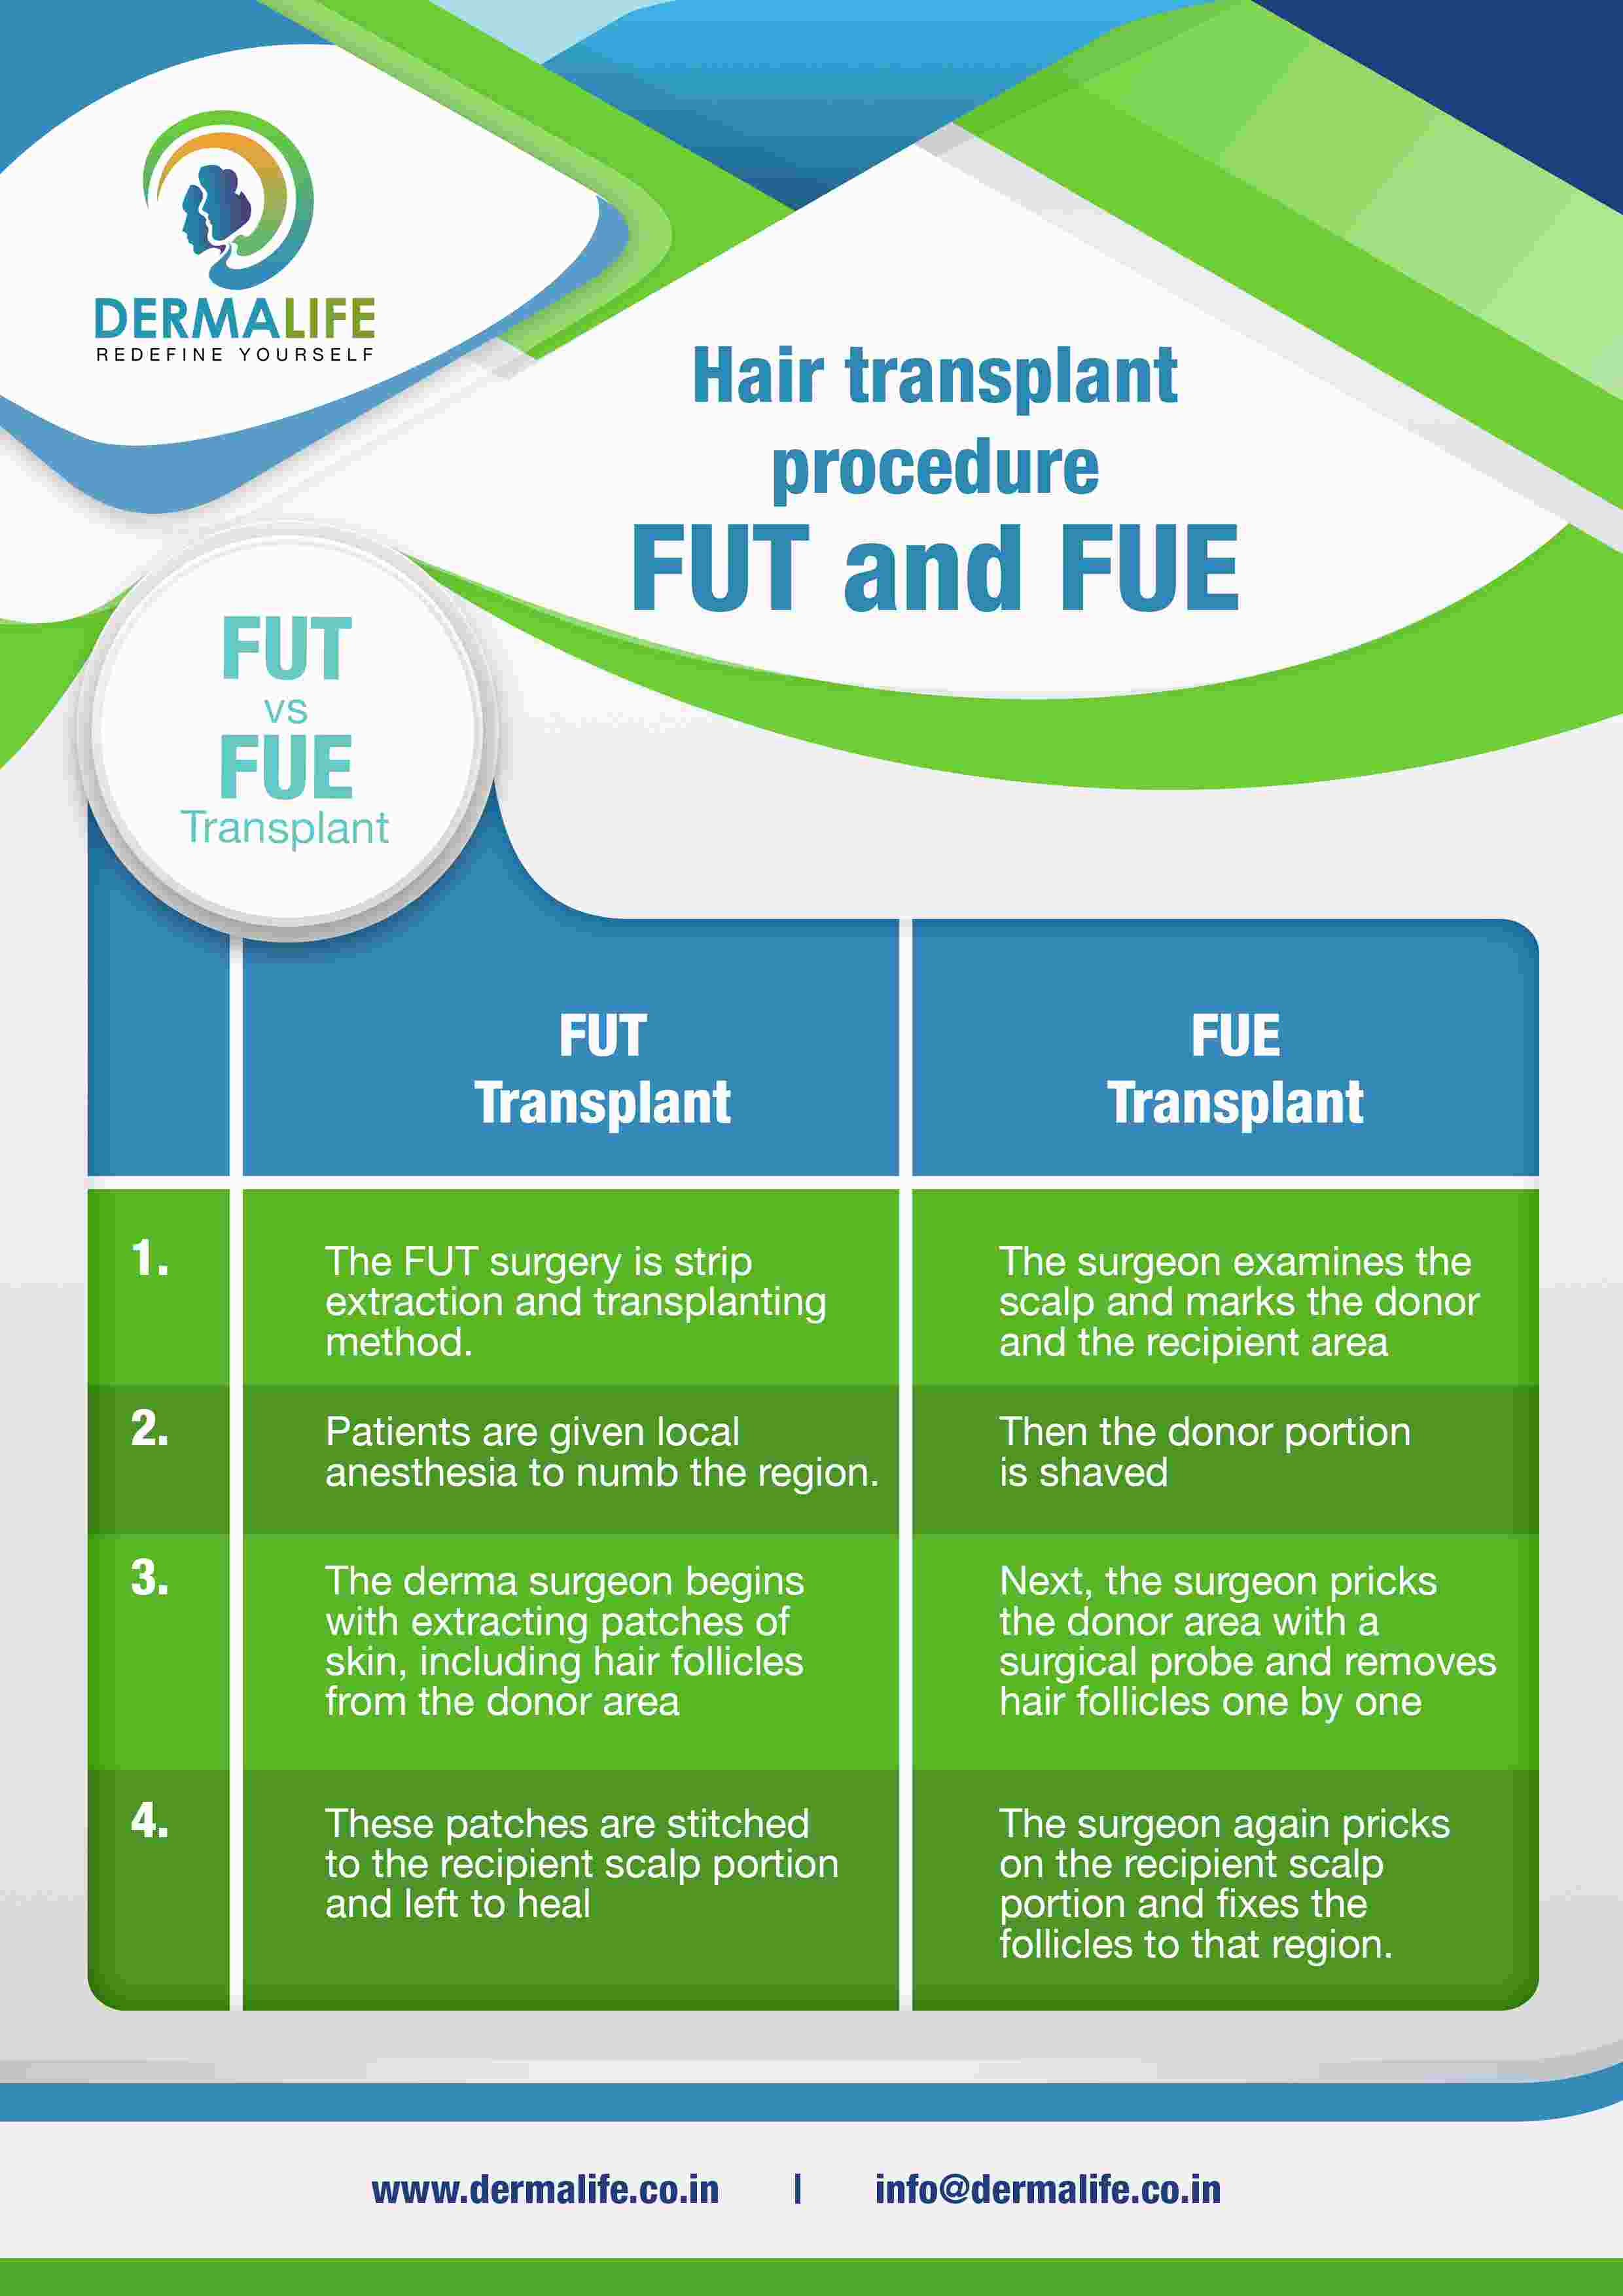 FUT v/s FUE Hair transplant